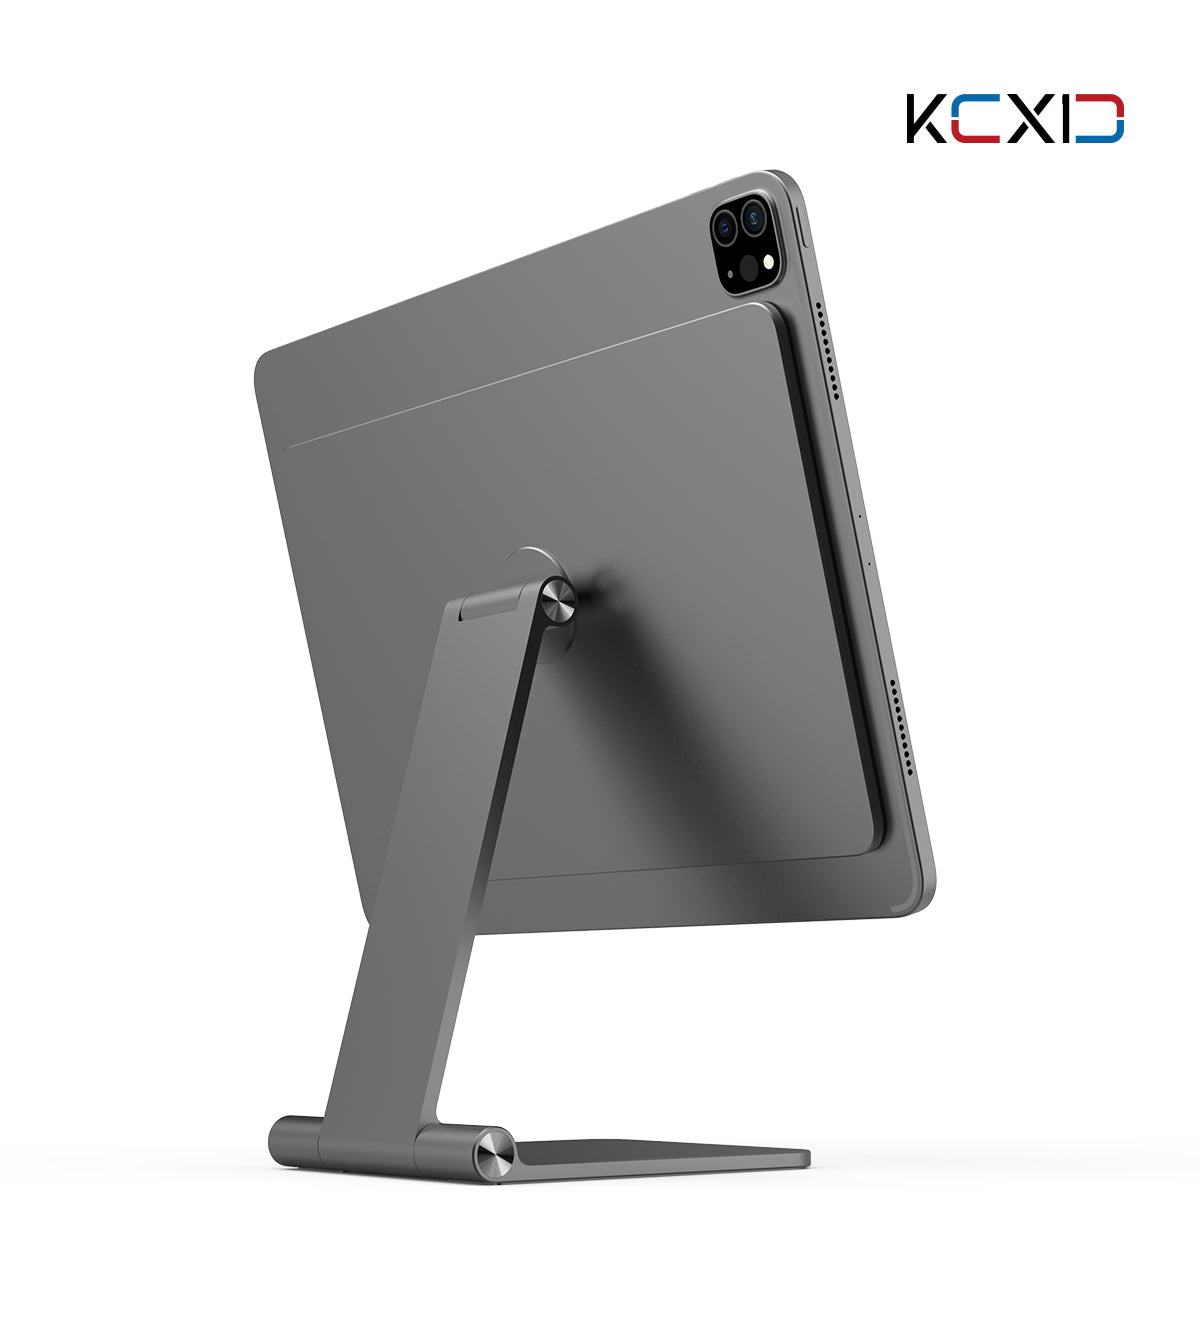 Soporte magnético plegable para iPad KUXIU X33